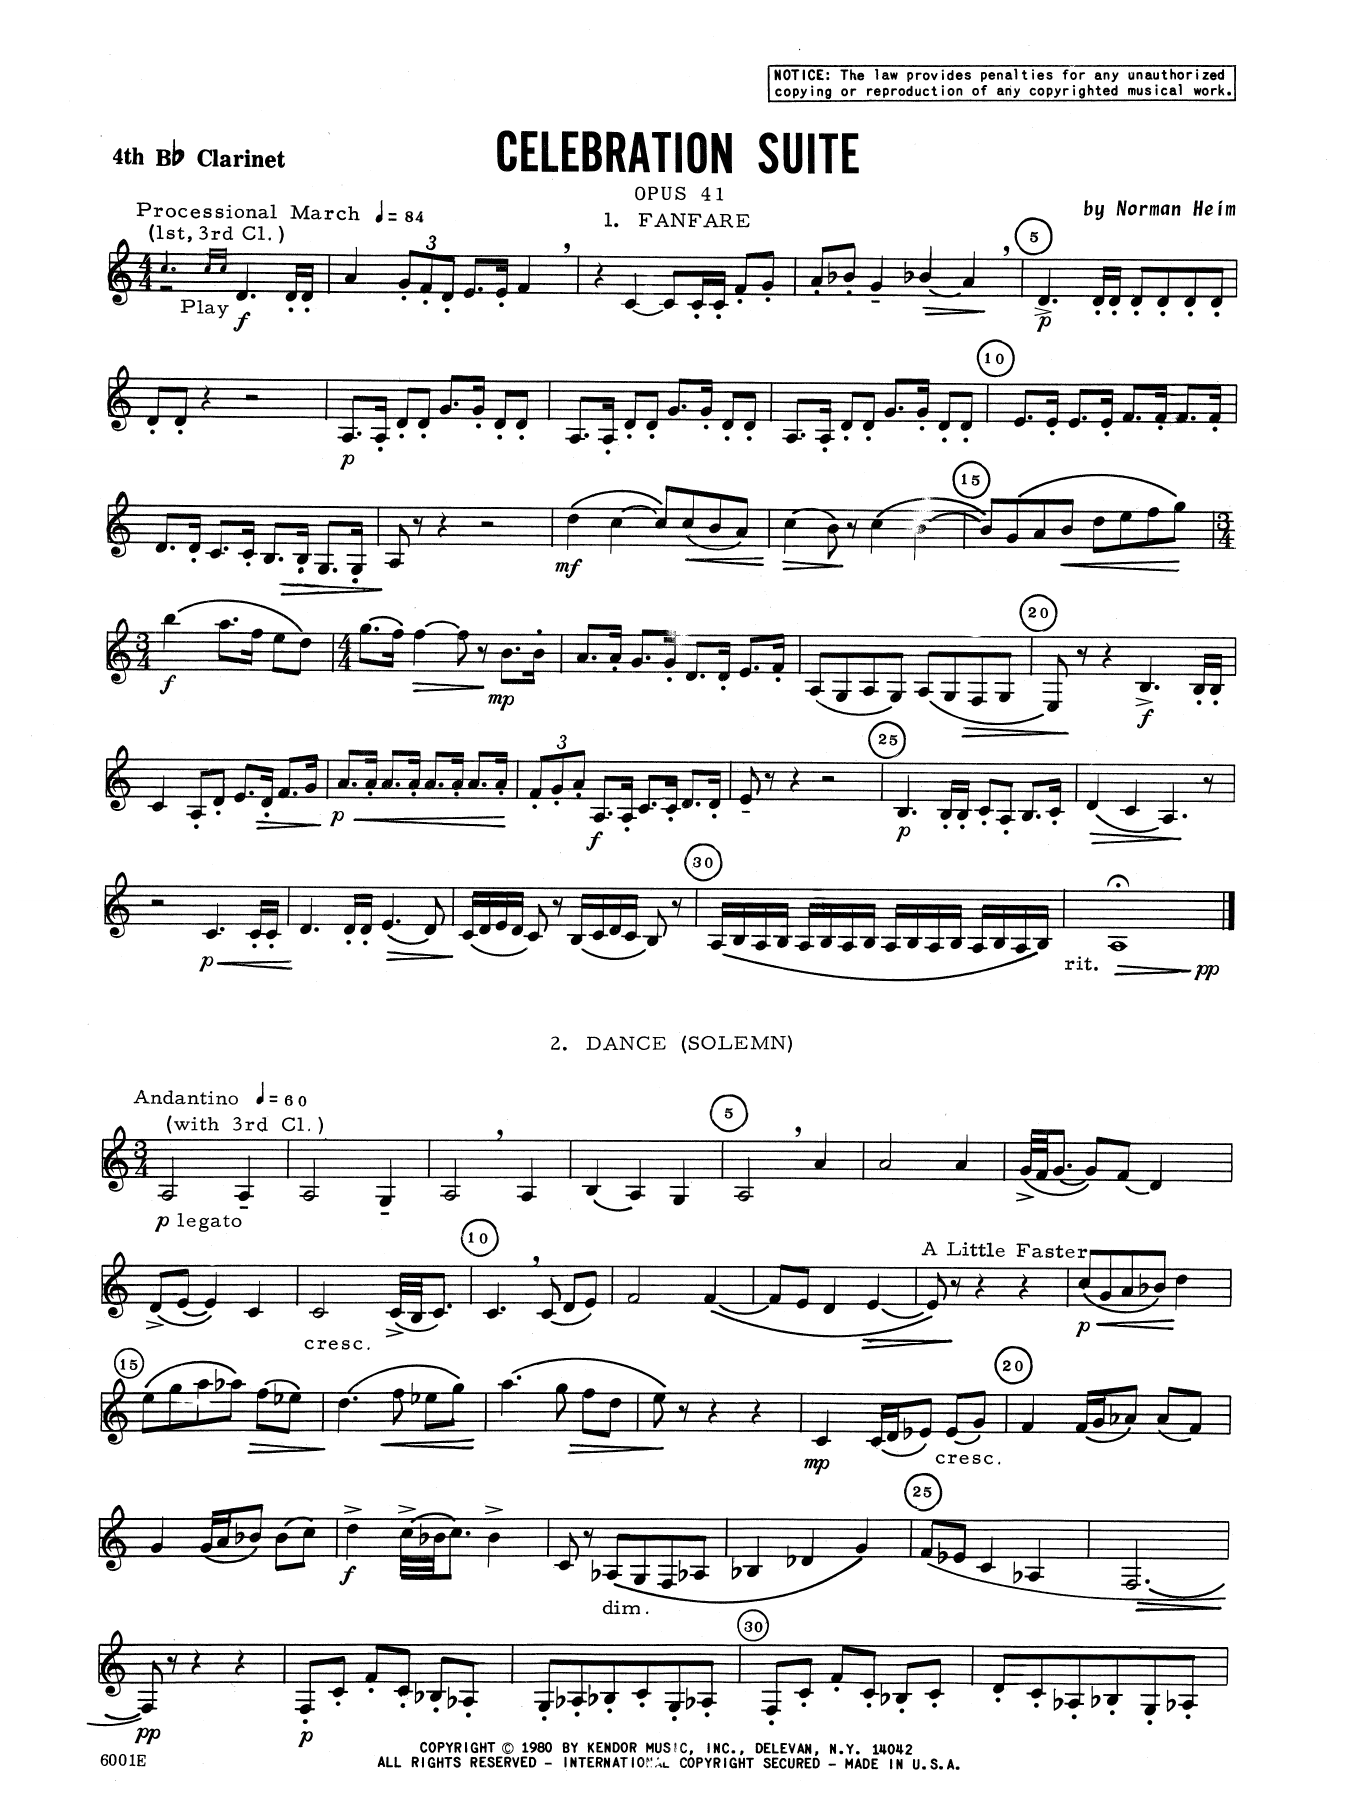 Download Heim Celebration Suite - 4th Bb Clarinet Sheet Music